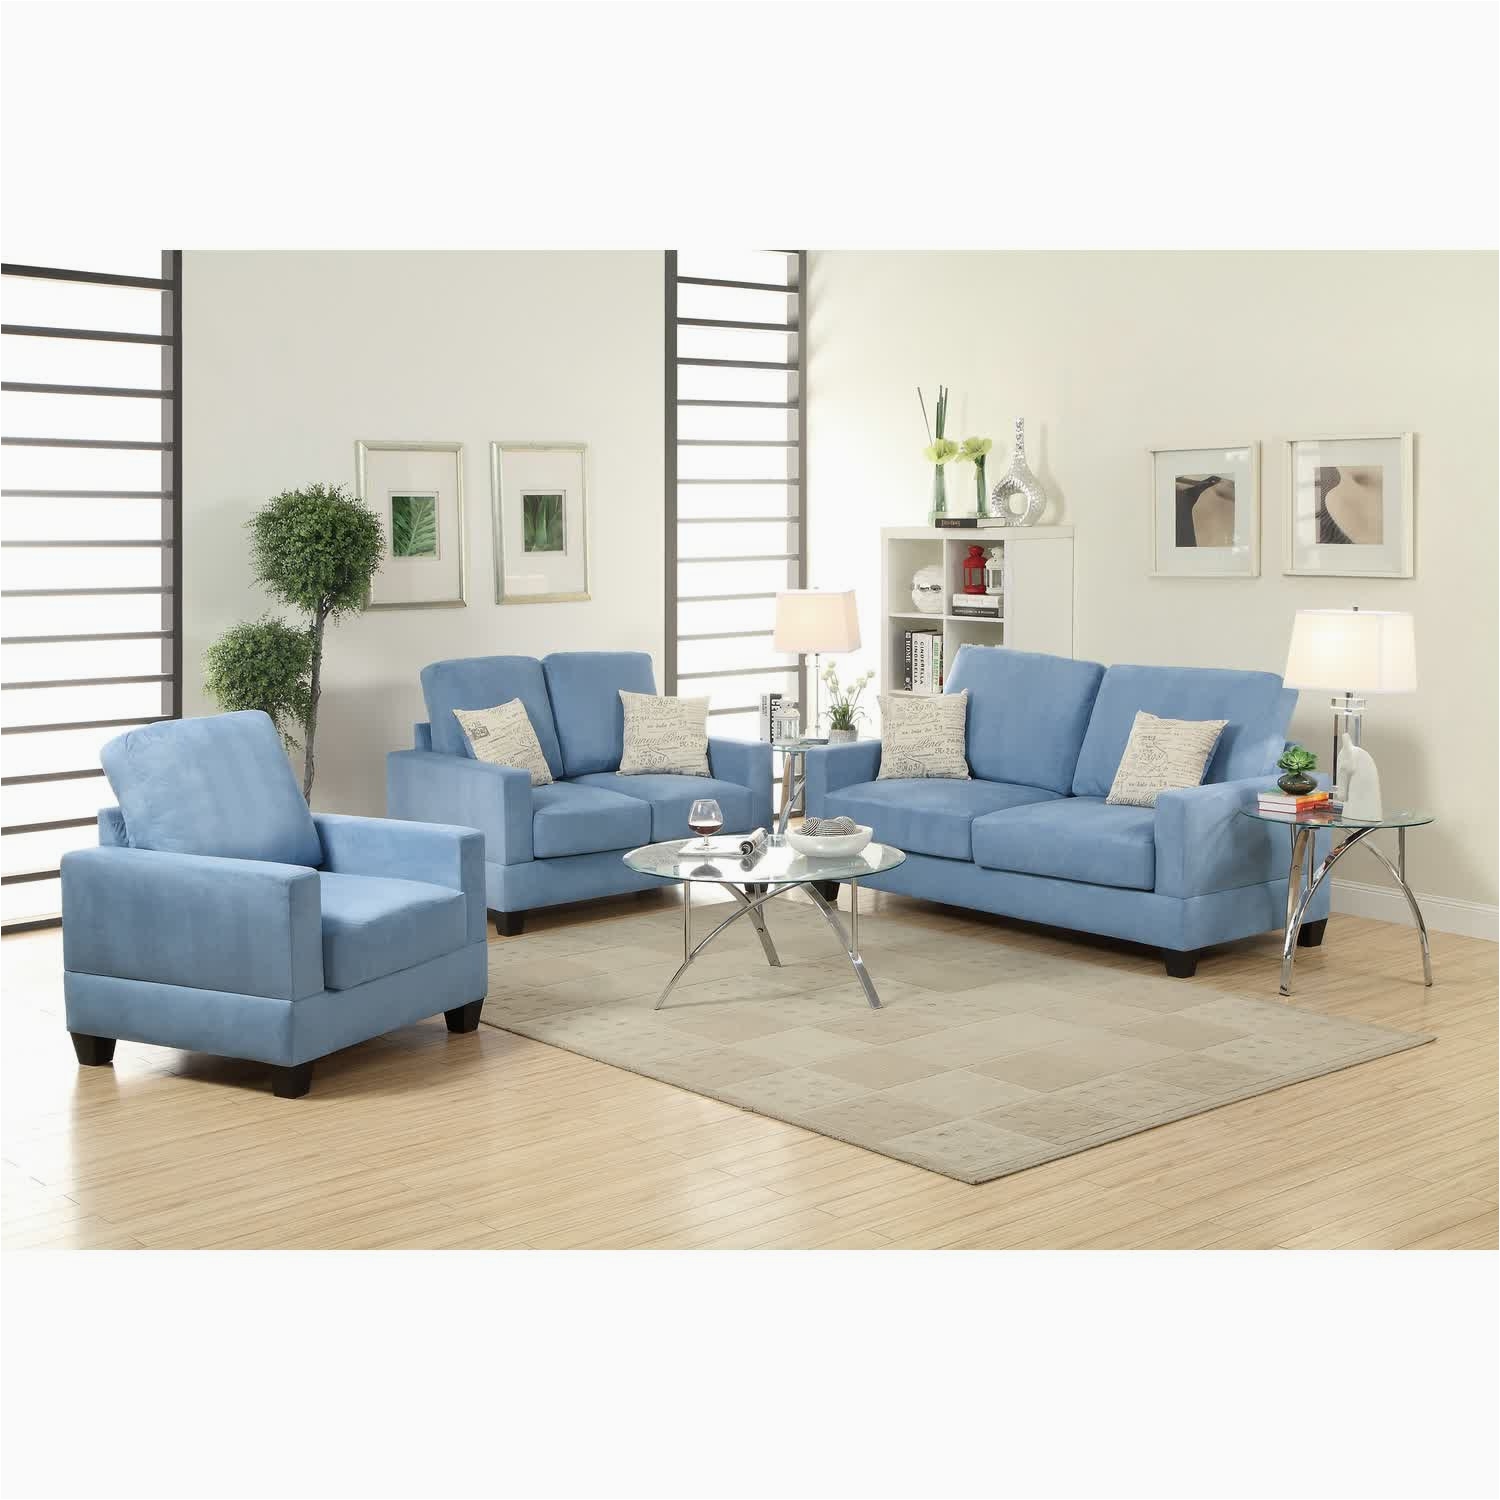 harlem furniture living room sets fresh modern living room furniture apartment emiliesbeauty image of 41 luxury